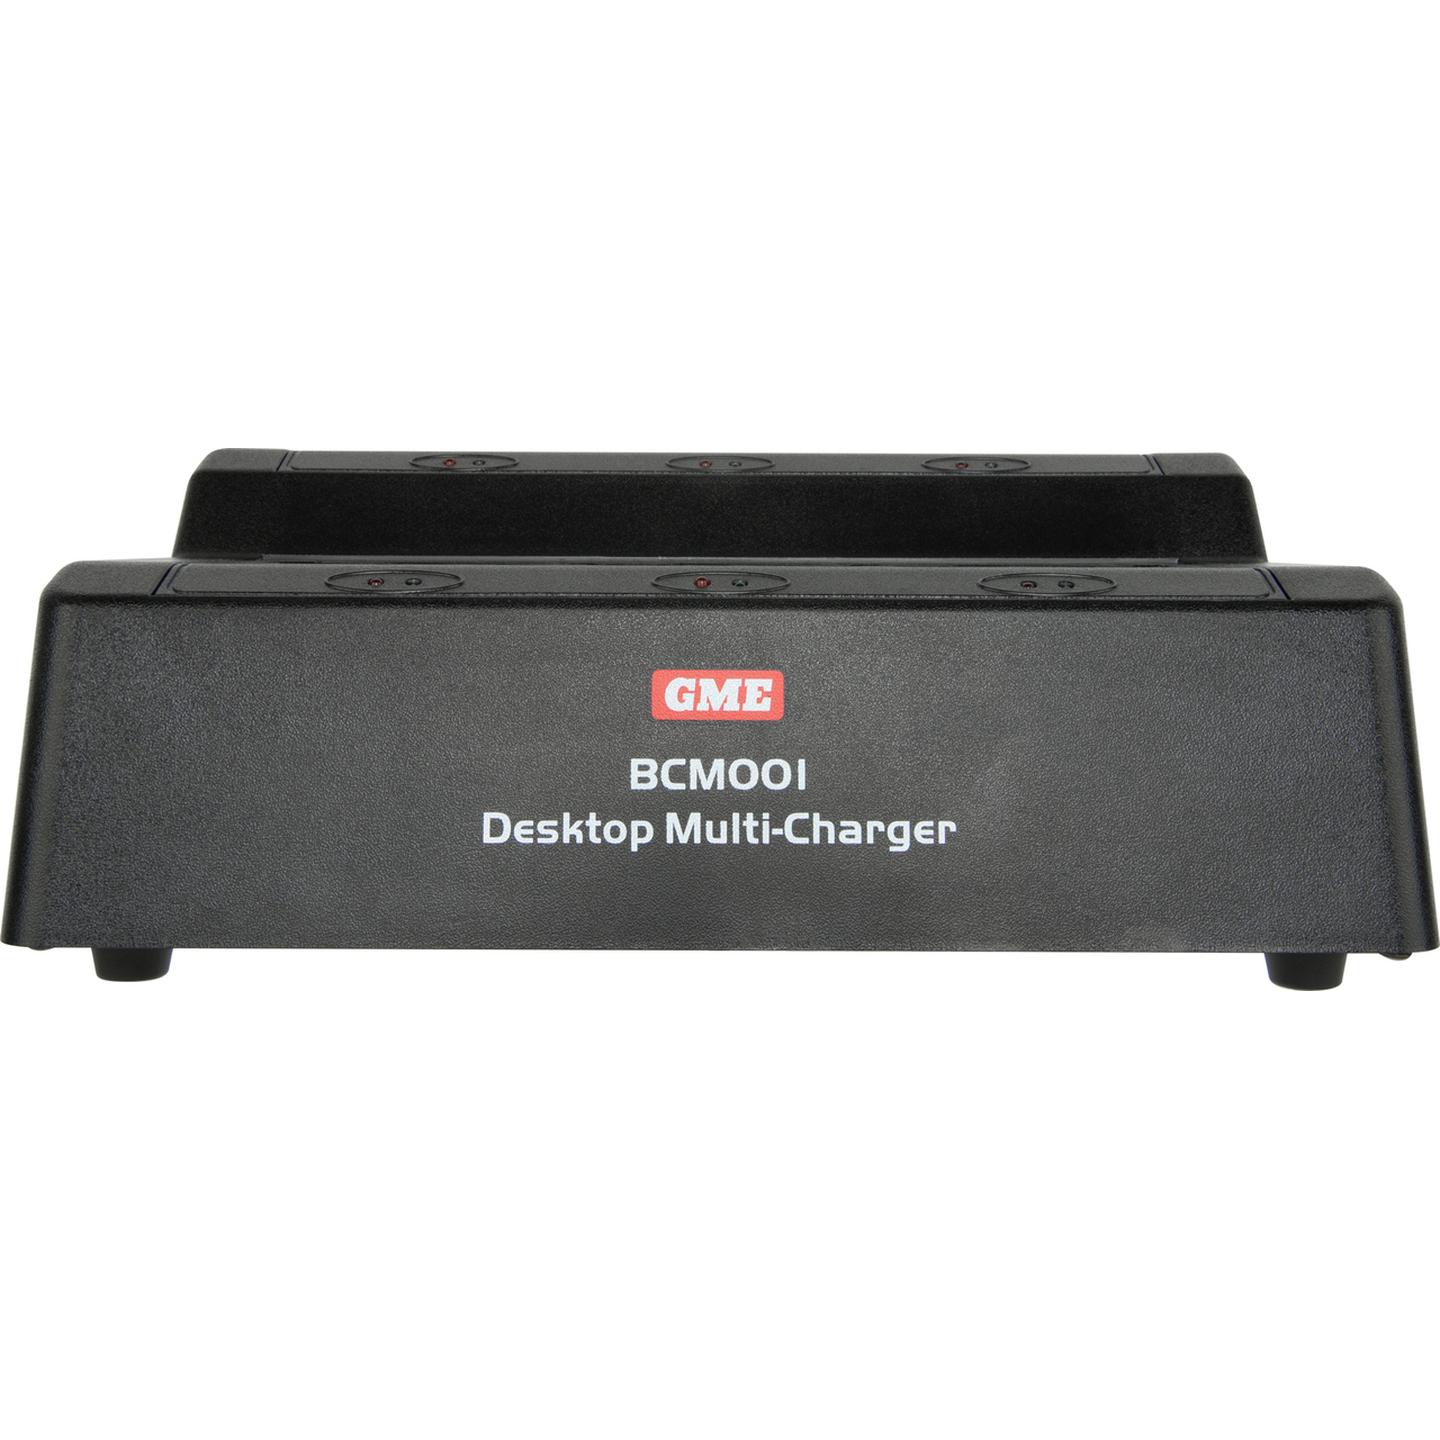 GME 6 Way Desktop Multicharger